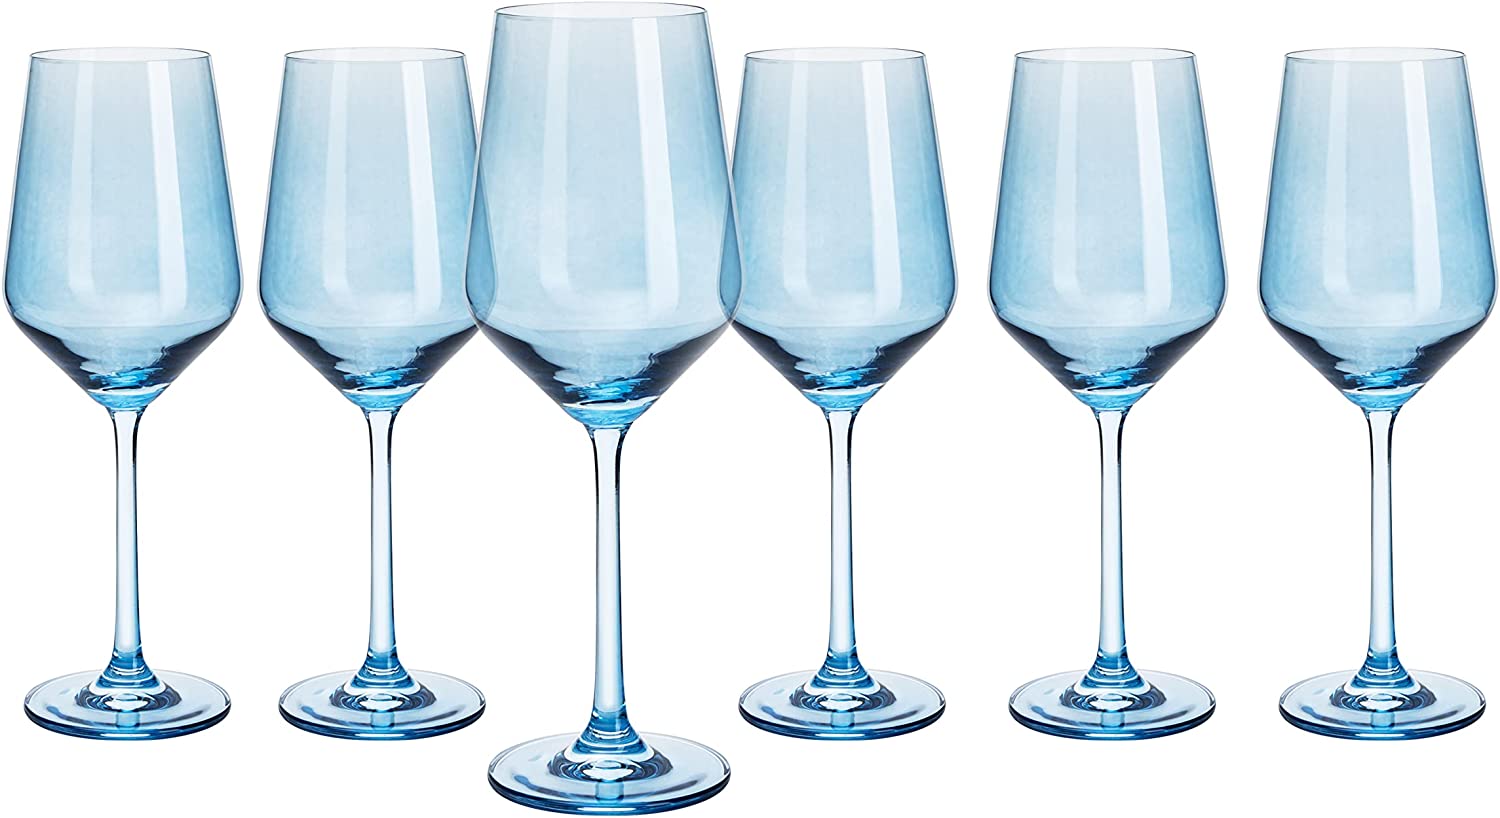 Red Wine Glasses Blue Stemmed Colored Wine Glasses Set Wine